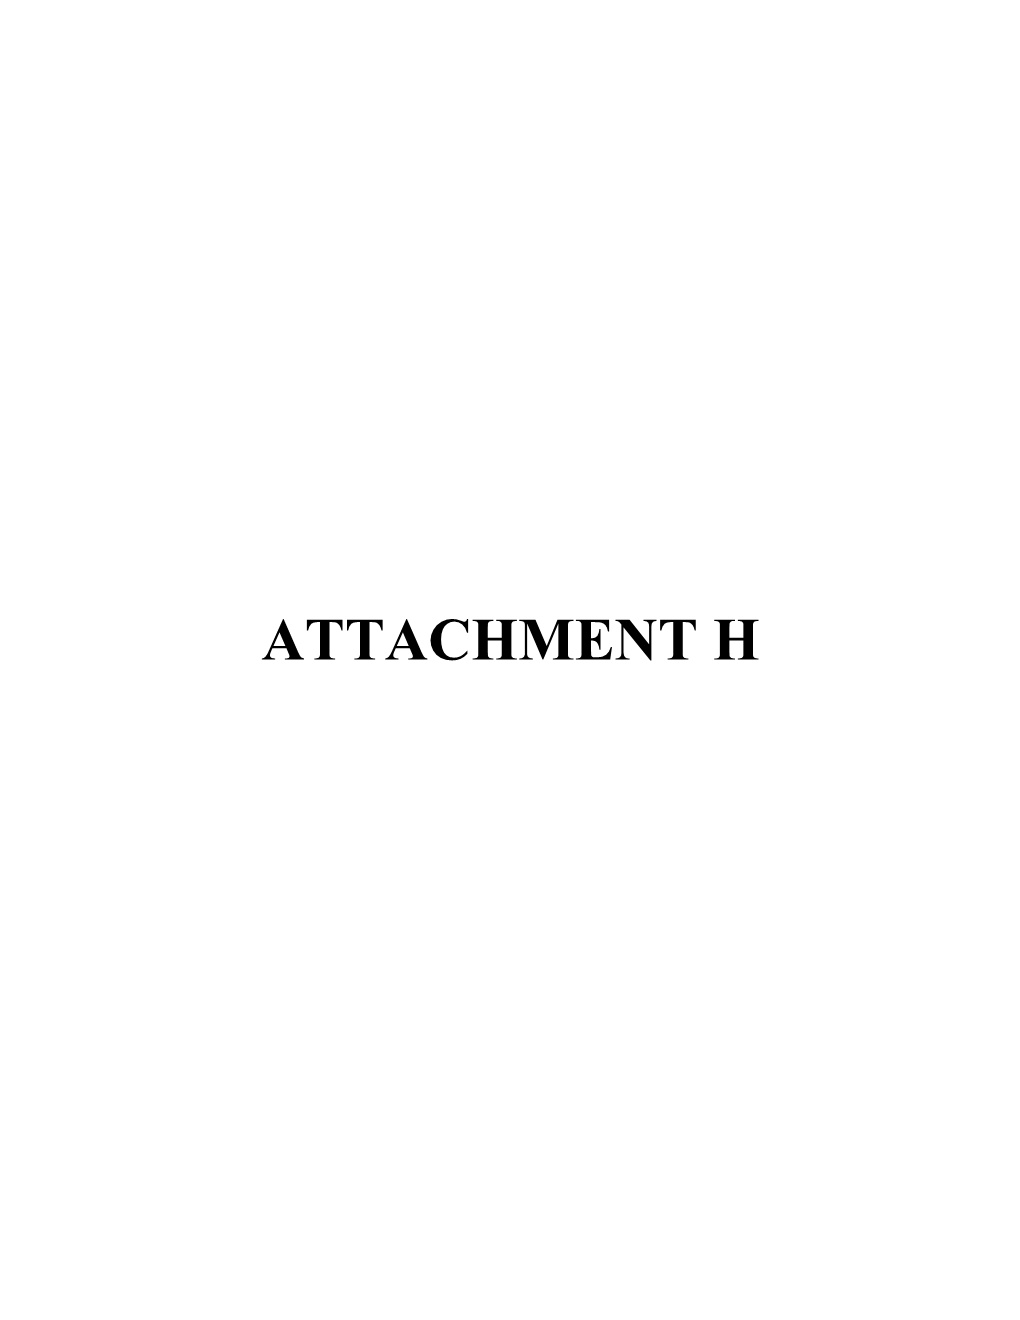 Attachment H Explanatory Notes to Attachment H